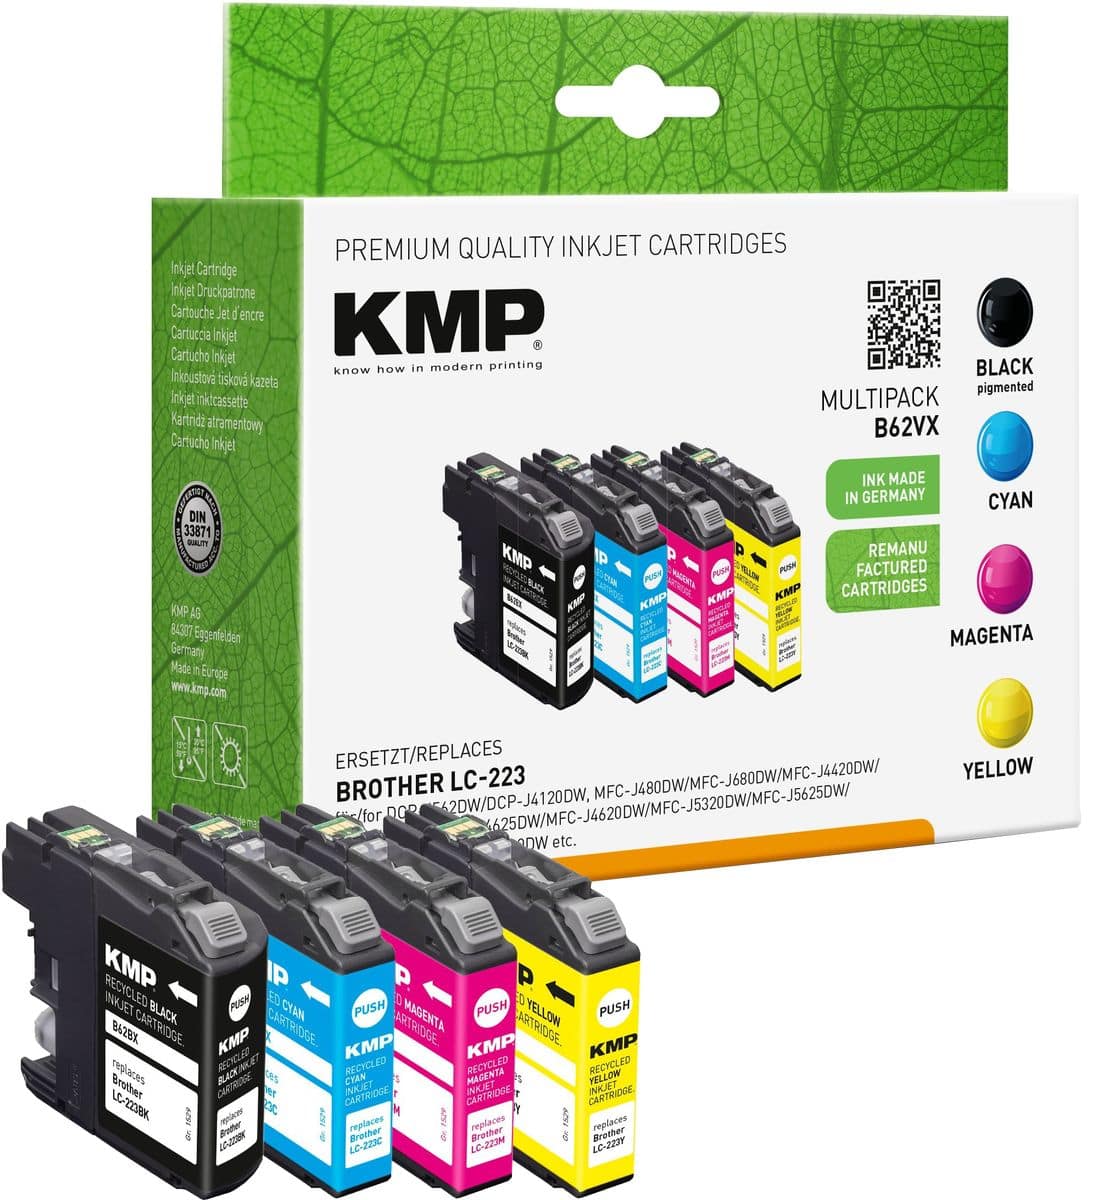 KMP Tintenpatronen Multipack B62VX ersetzt Brother LC-223 von KMP